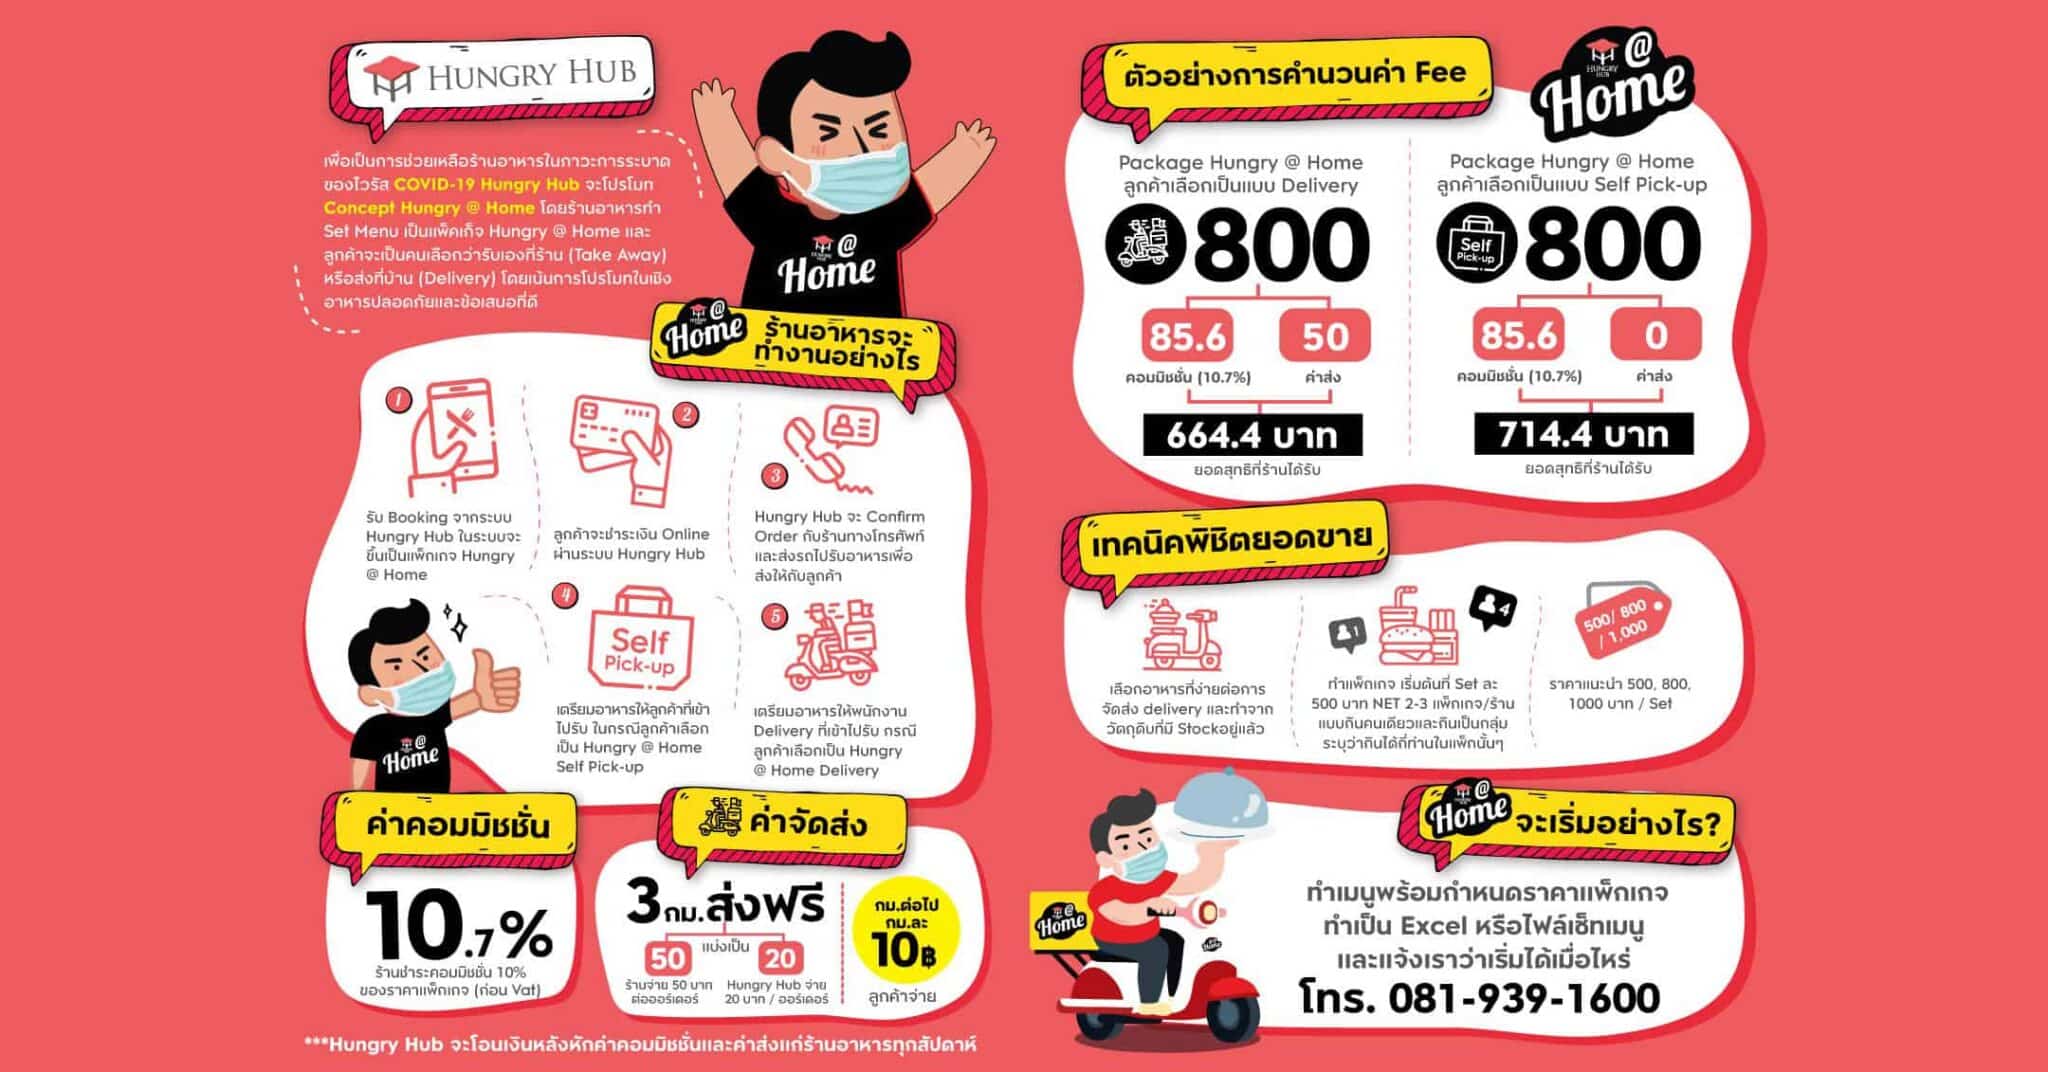 Hungry Hub สตาร์ทอัพไทยเพื่อร้านอาหารที่อยาก Delivery ด้วยคอมฯ แค่ 10.7%